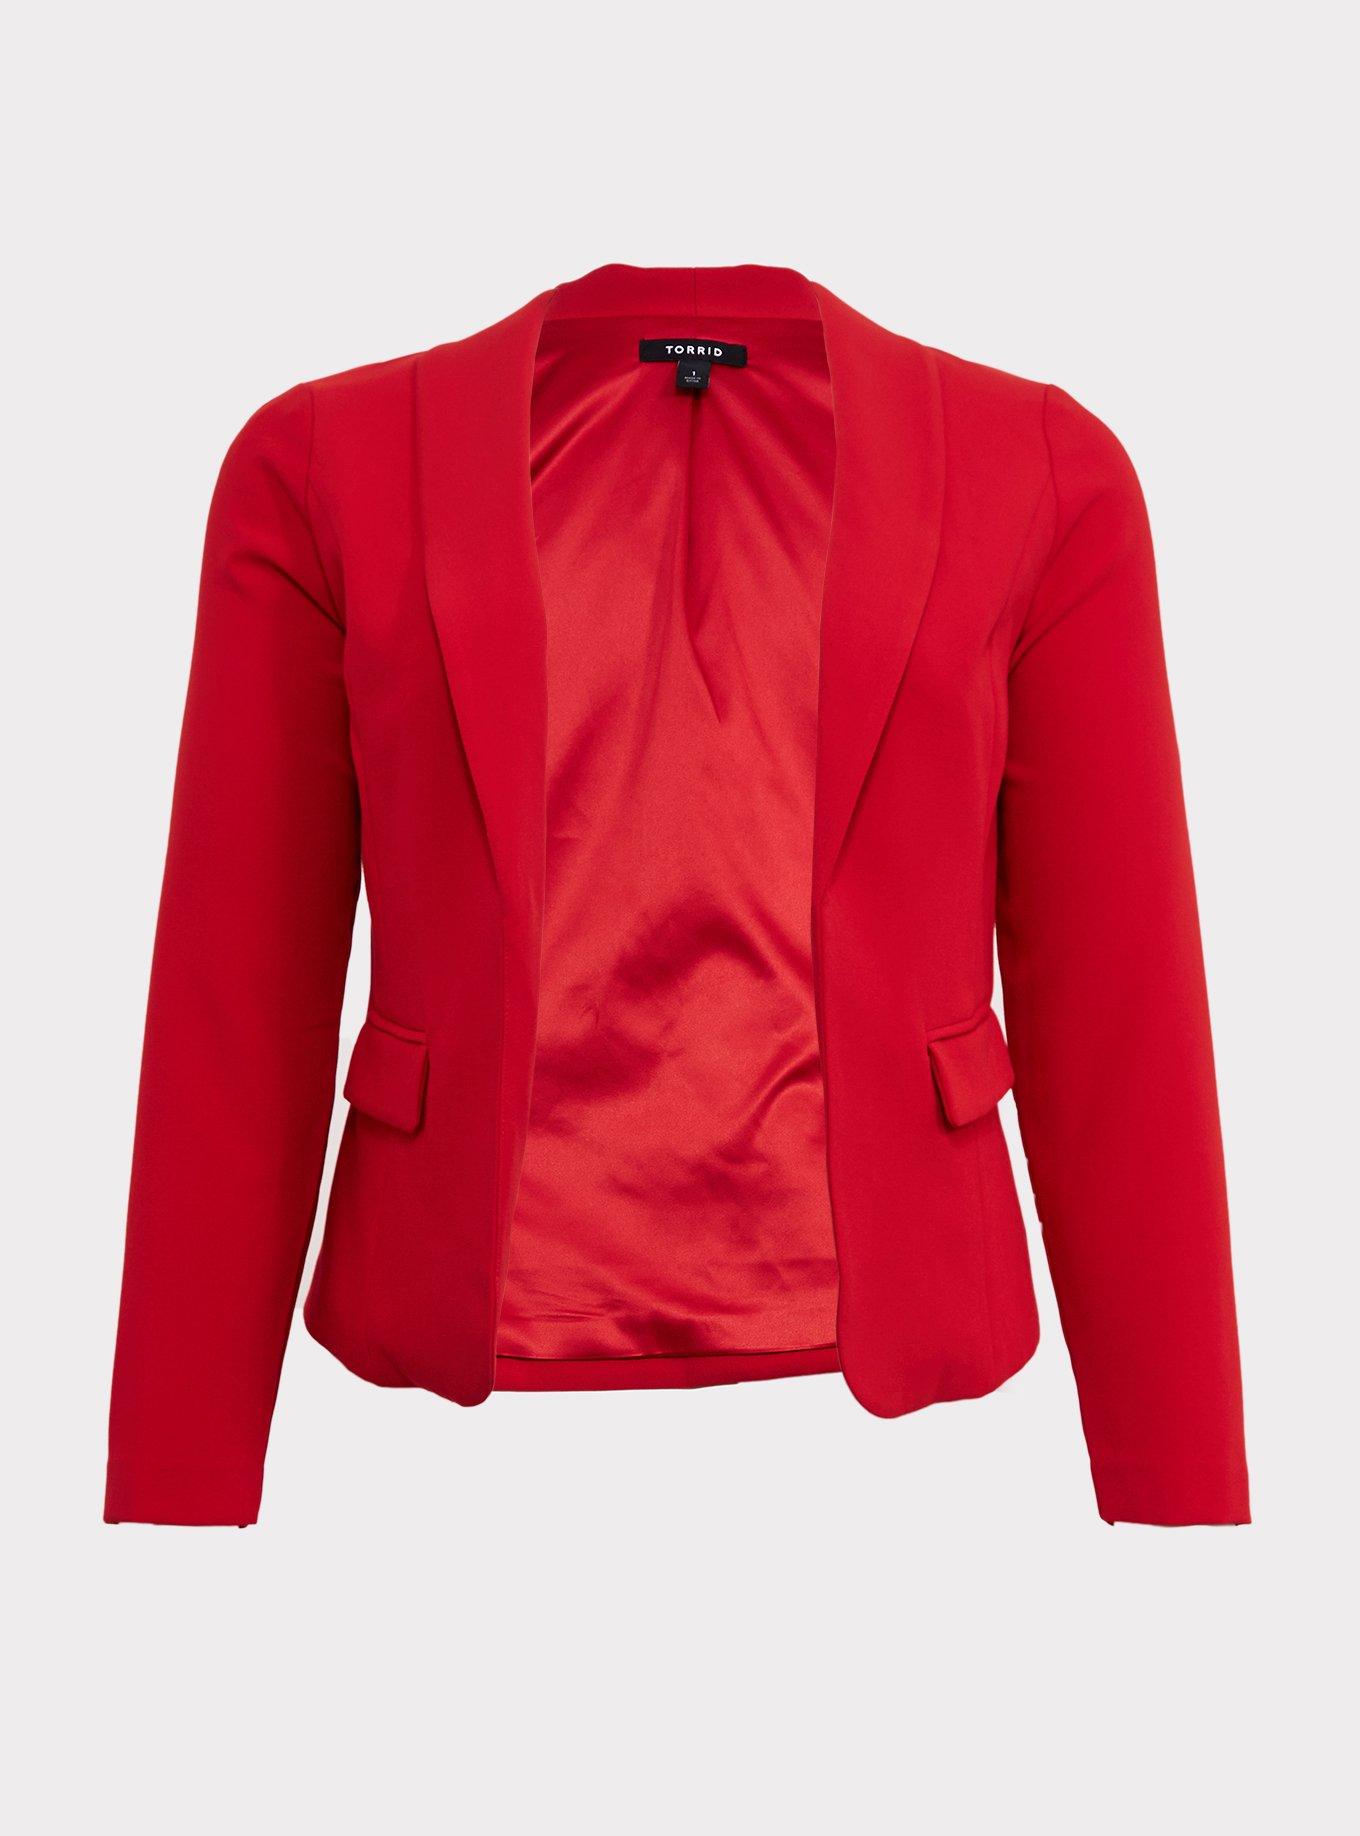 Plus Size - Red Open Front Blazer - Torrid